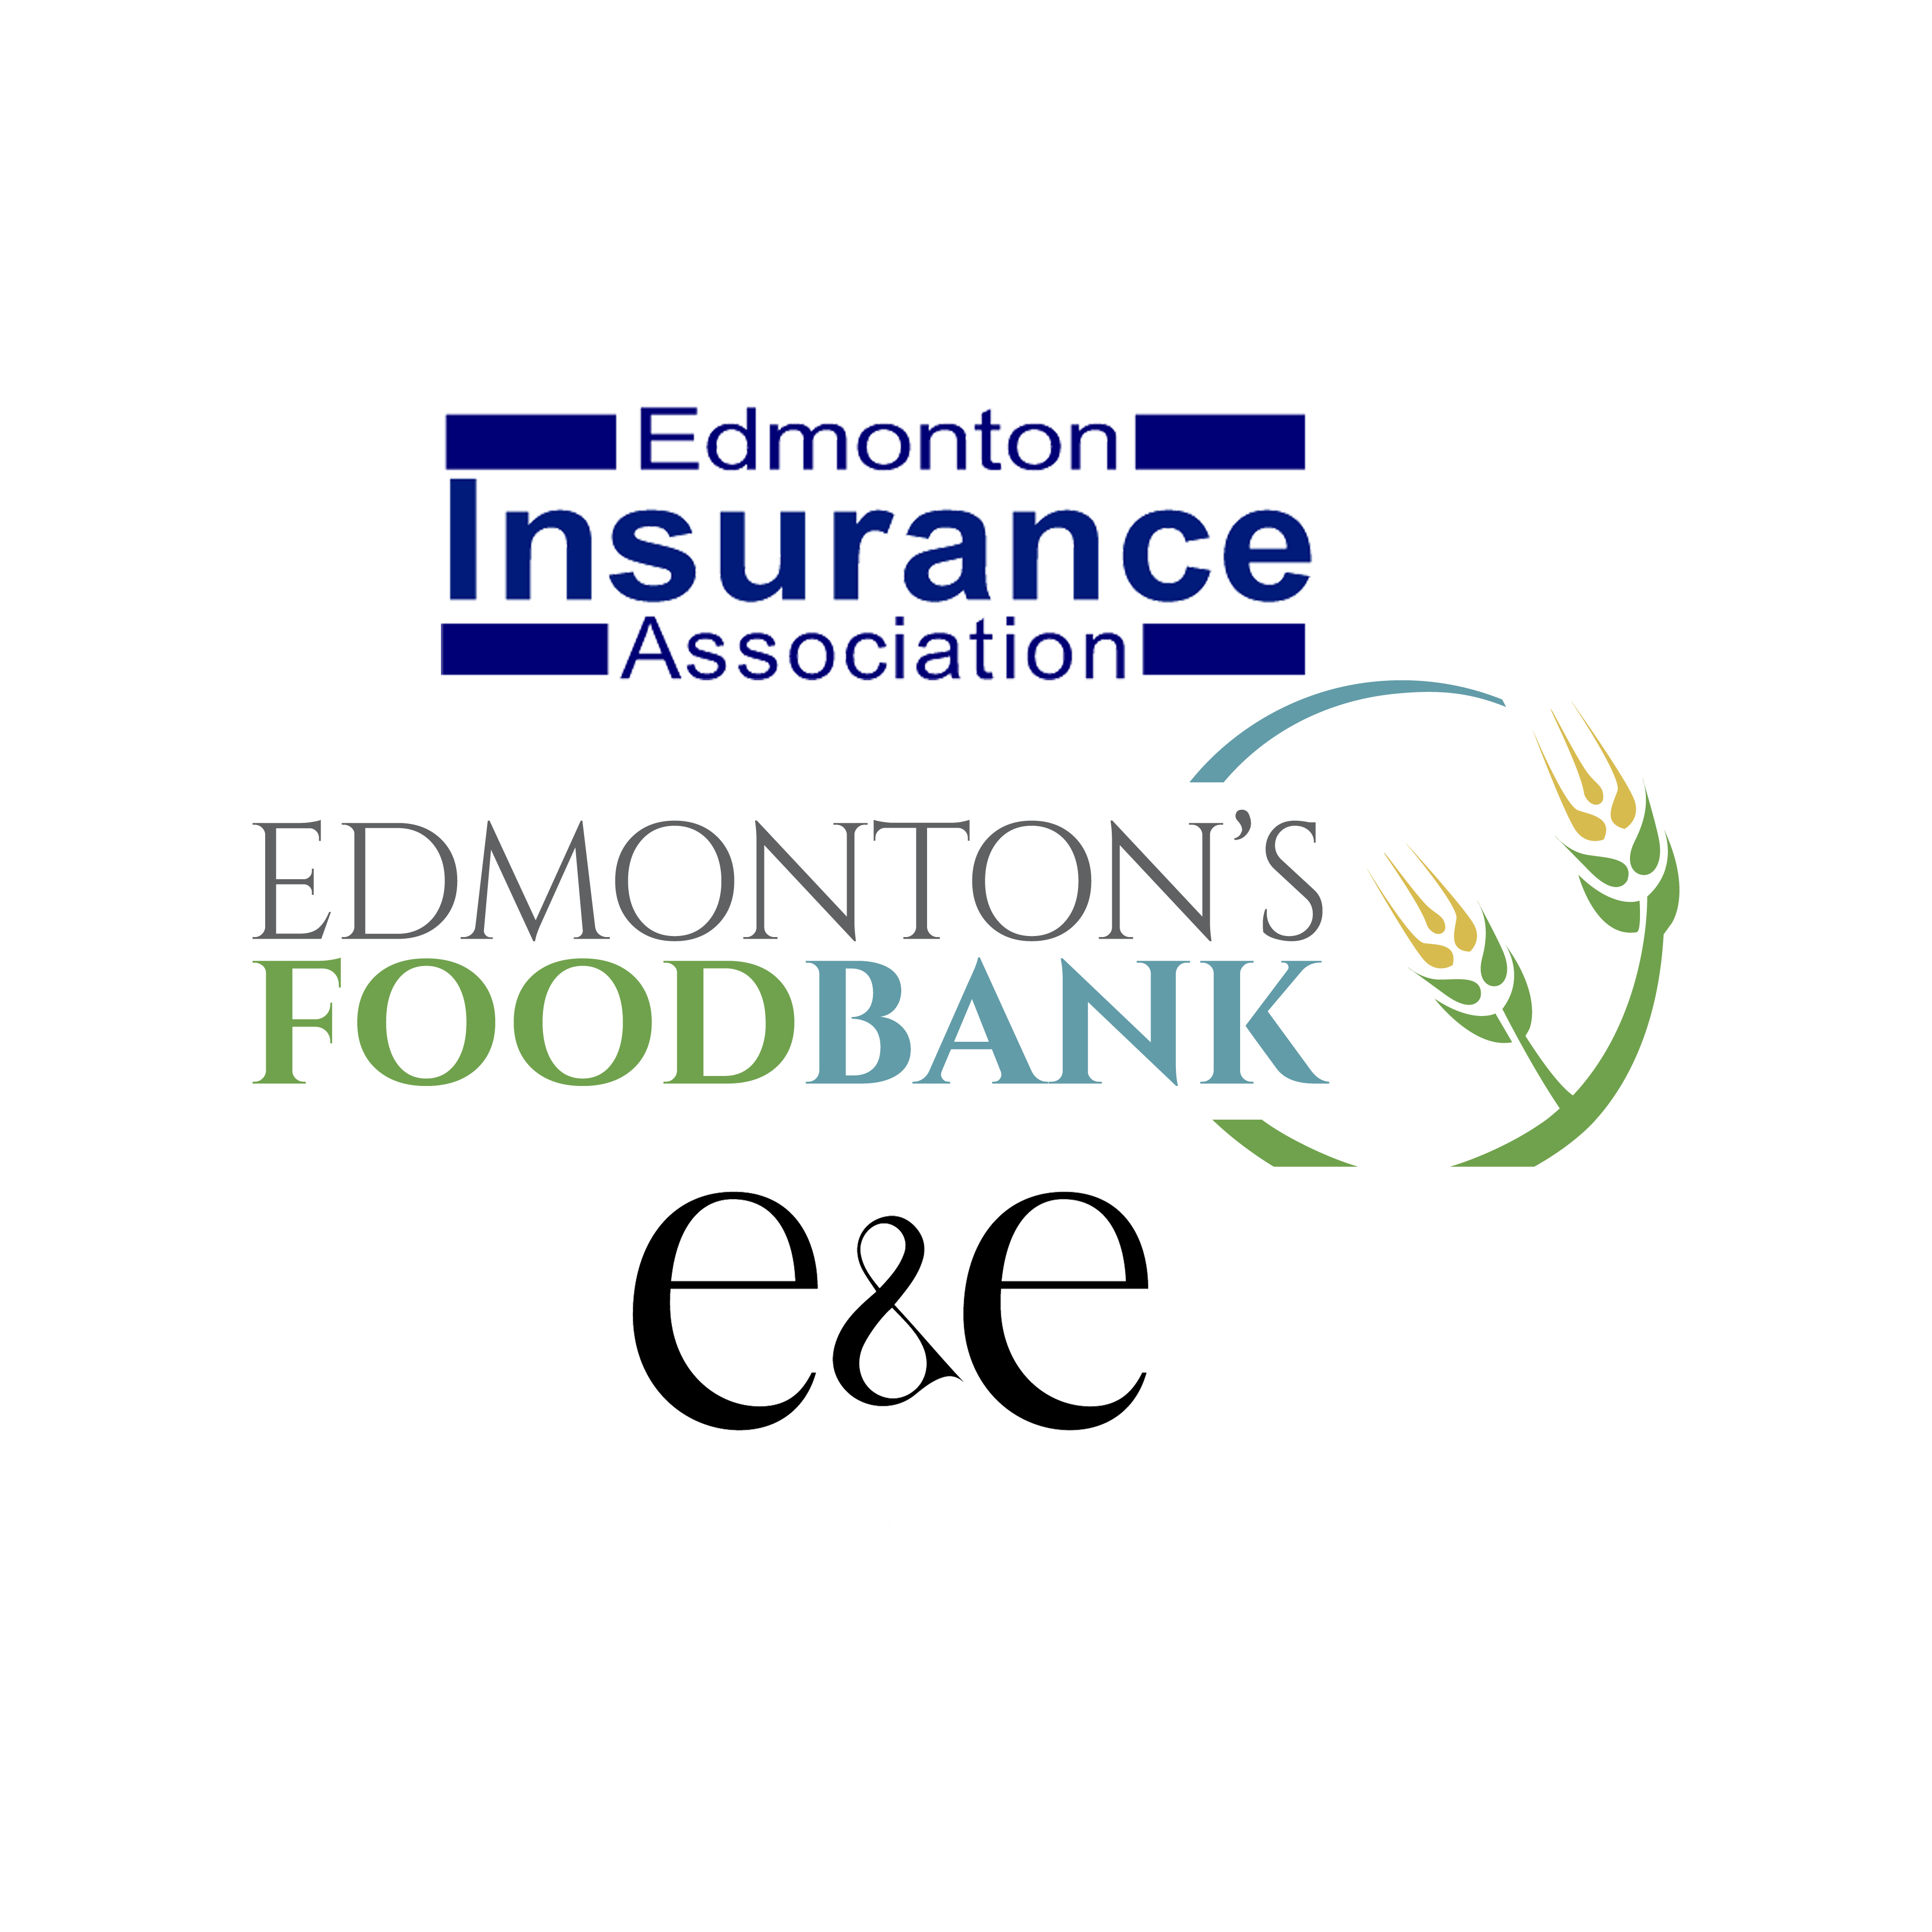 Supporting Edmonton's Food Bank